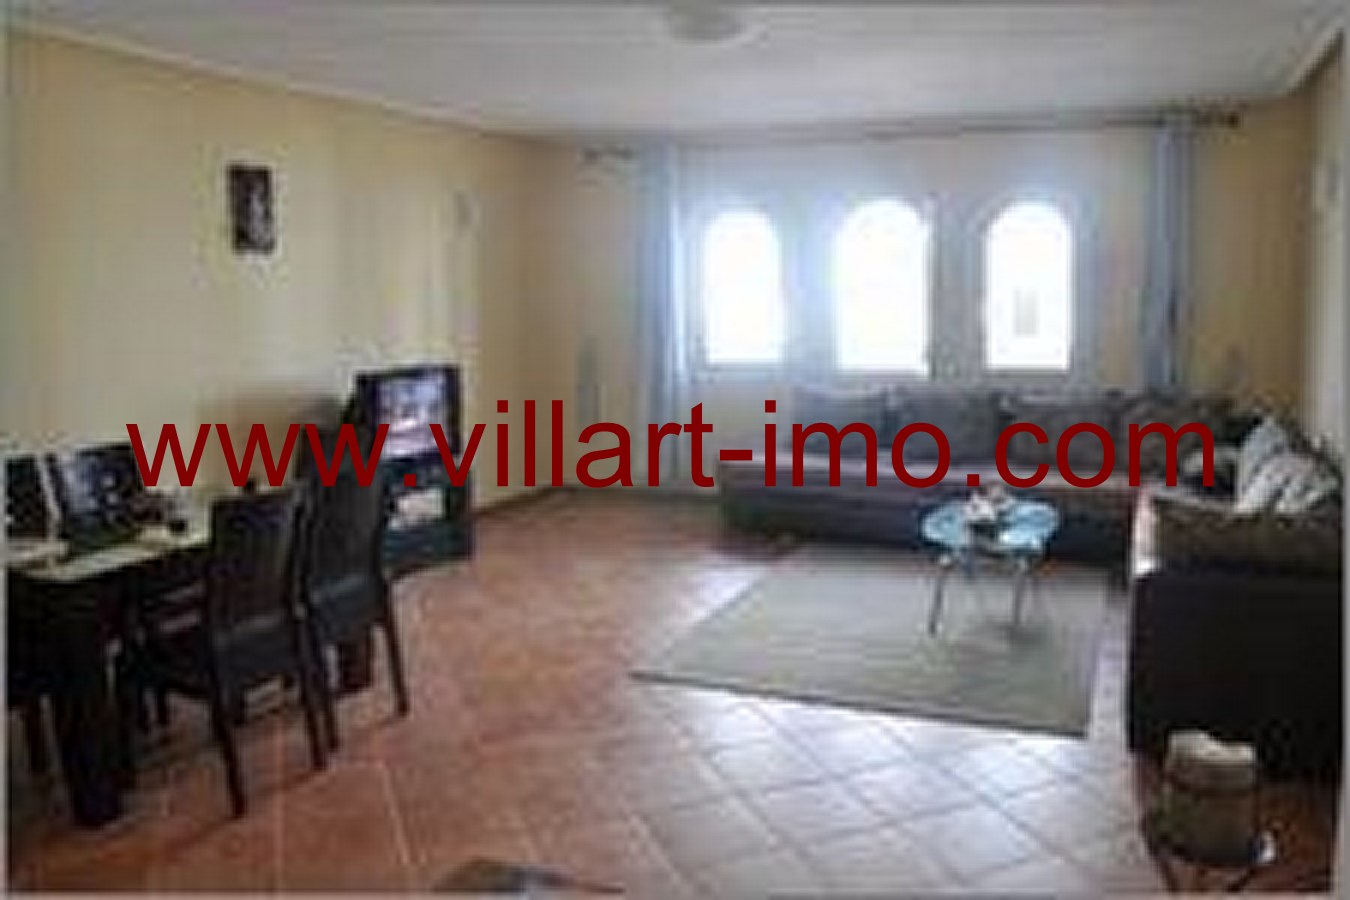 4- Vente -Appartement-Tanger-Maroc–Malabata- Salon-VA50-Villartimmo